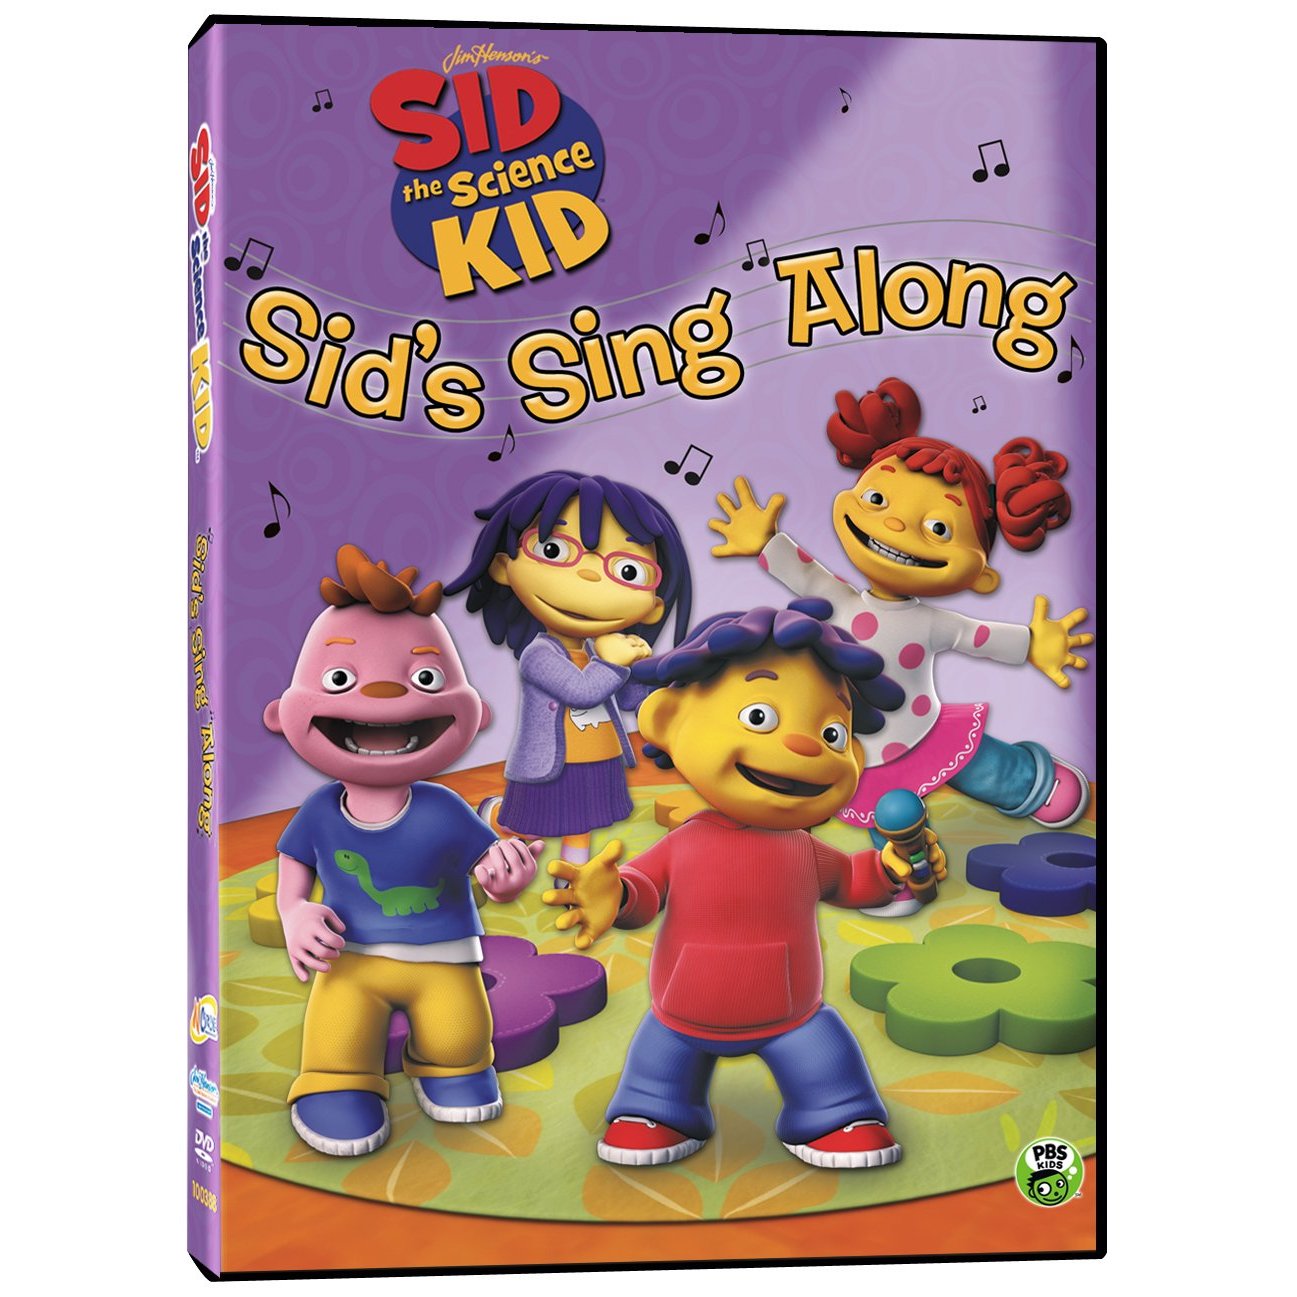 Image Sid the Science Kid Sid's Sing Along DVD.jpg